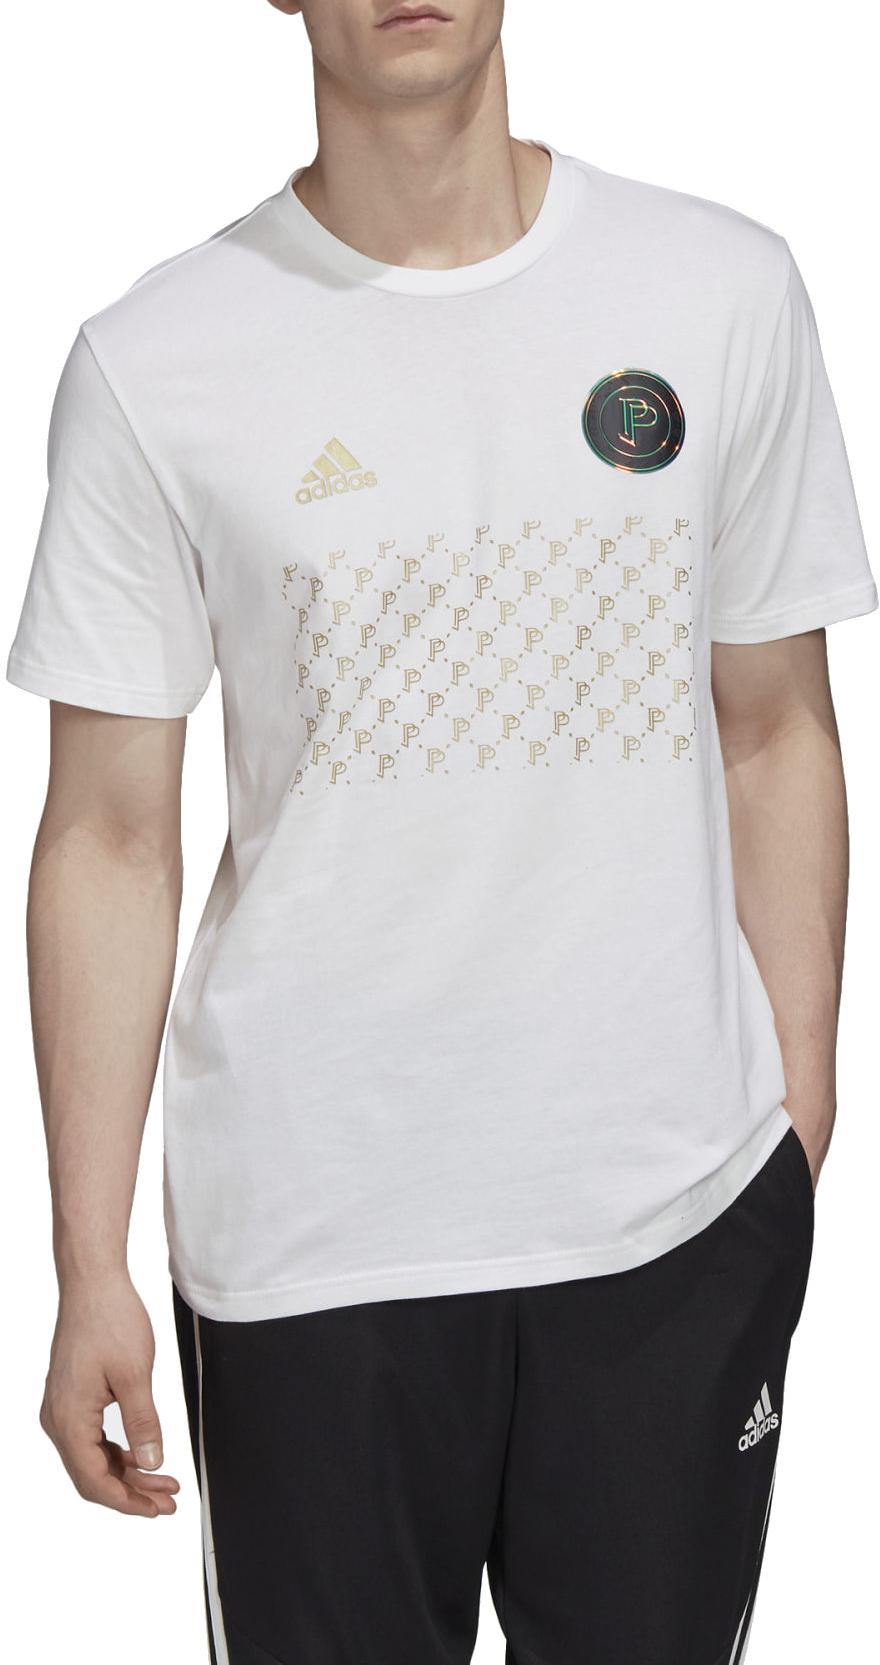 Magliette adidas Paul Pogba Graphic T shirt